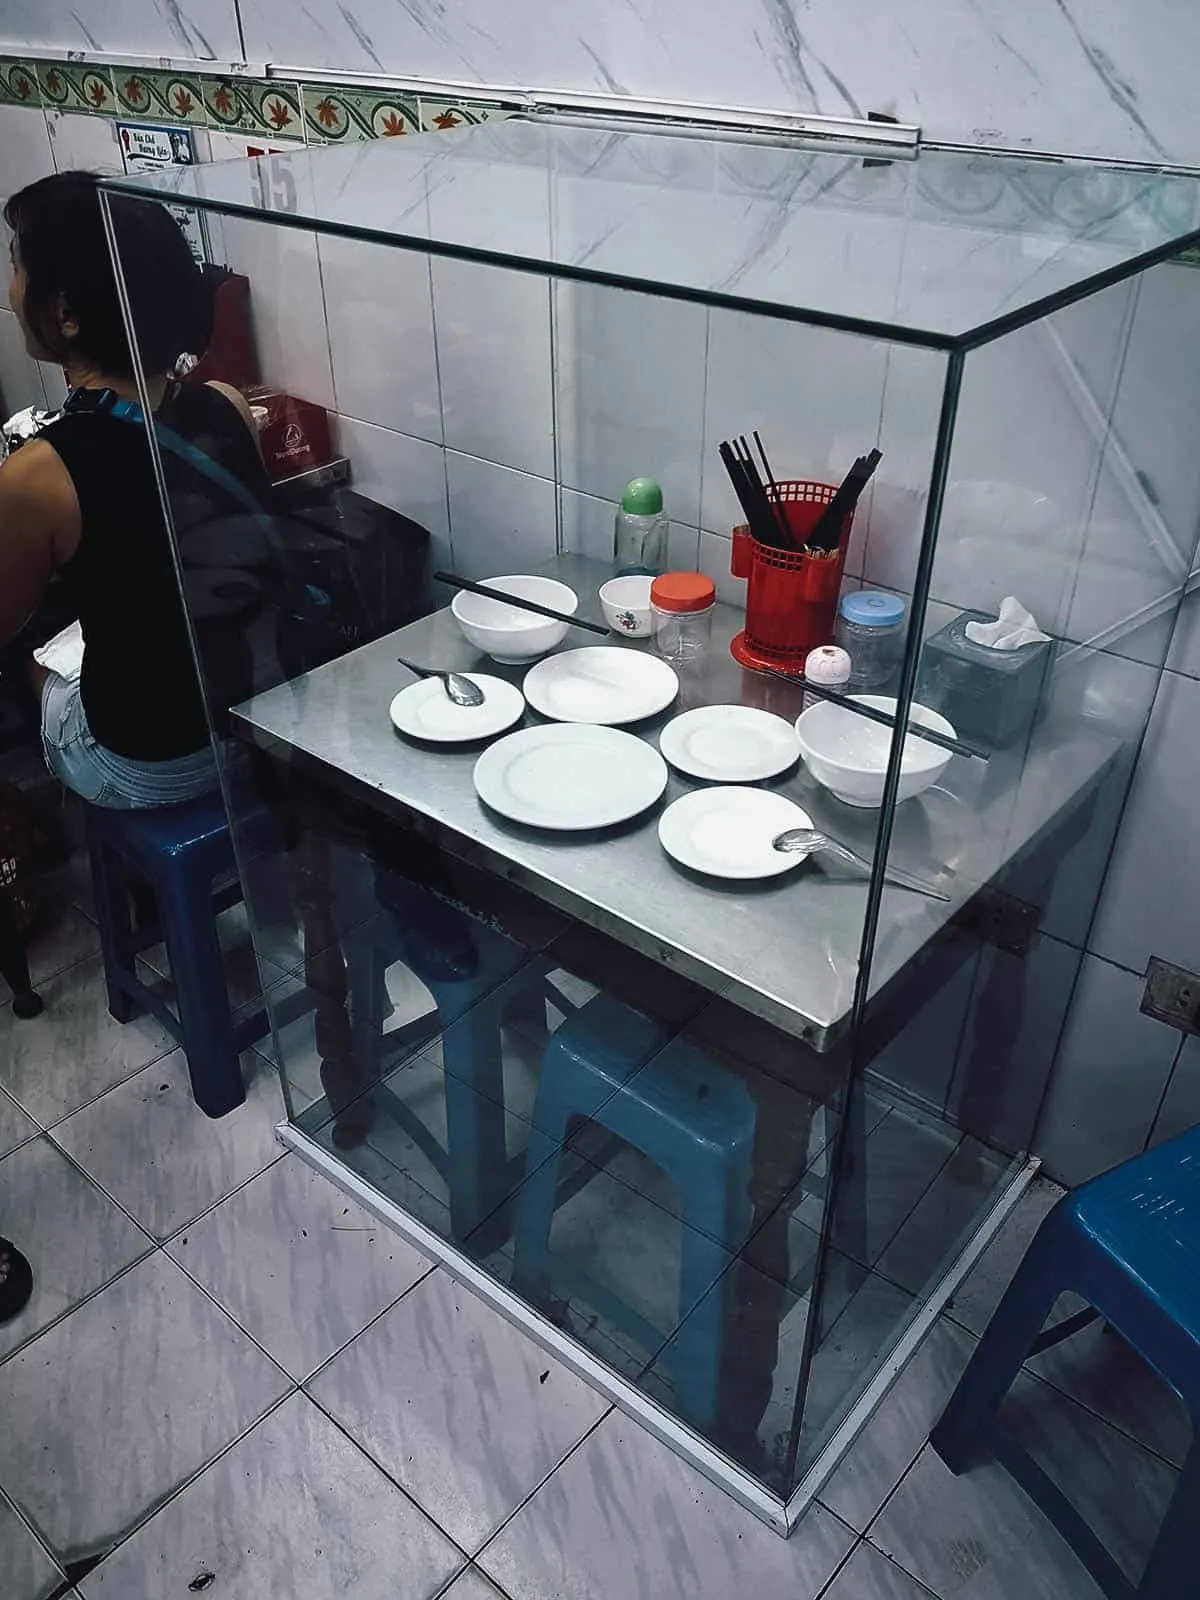 Obama and Bourdain's table at Bún chả Hương Liên restaurant in Hanoi